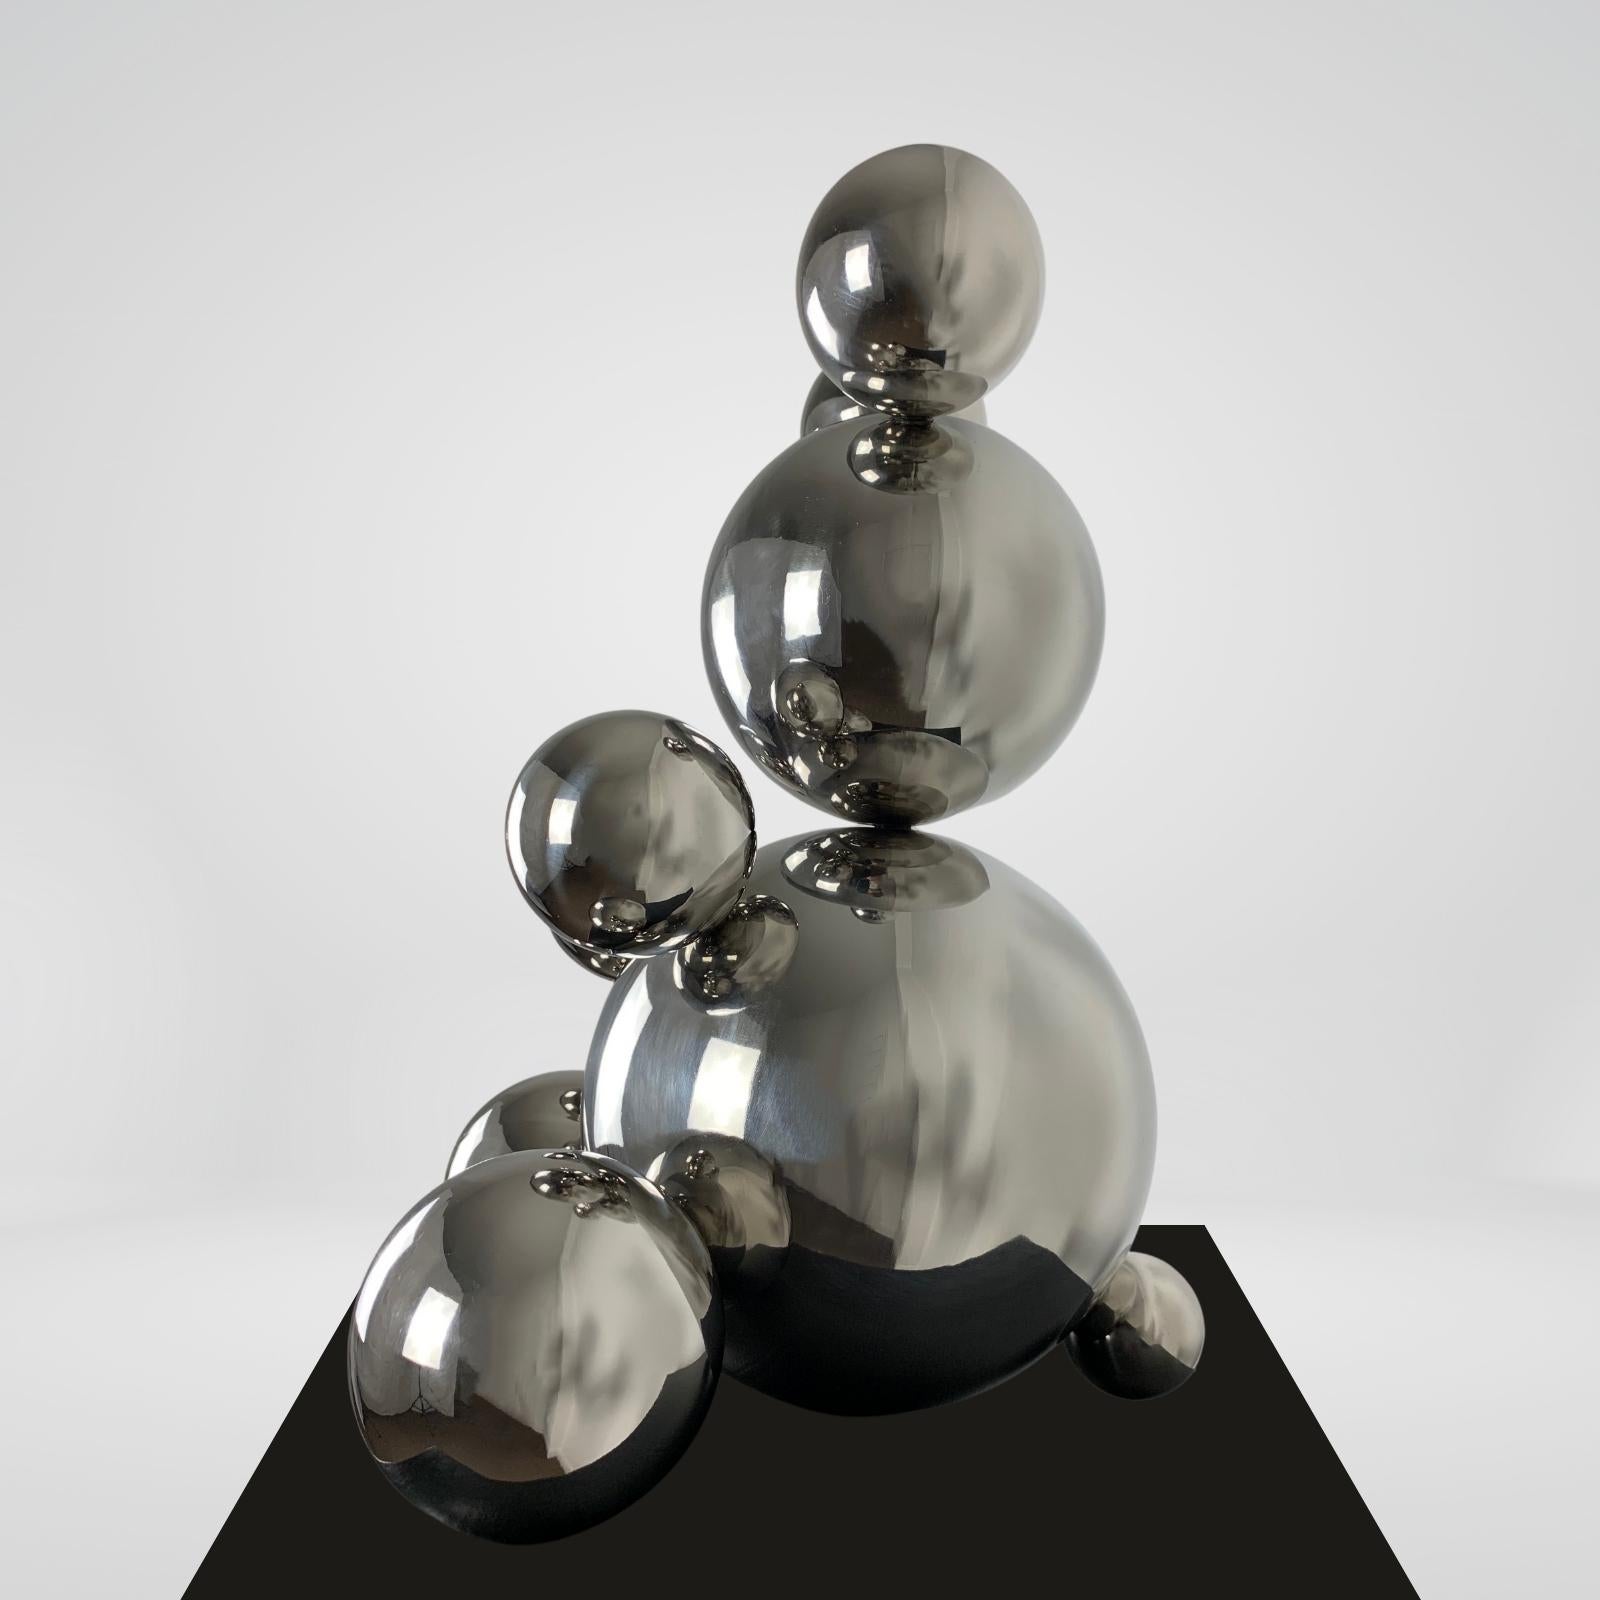 Big Stainless Steel Bear 'Inna' Sculpture Minimalistic Animal Art 5